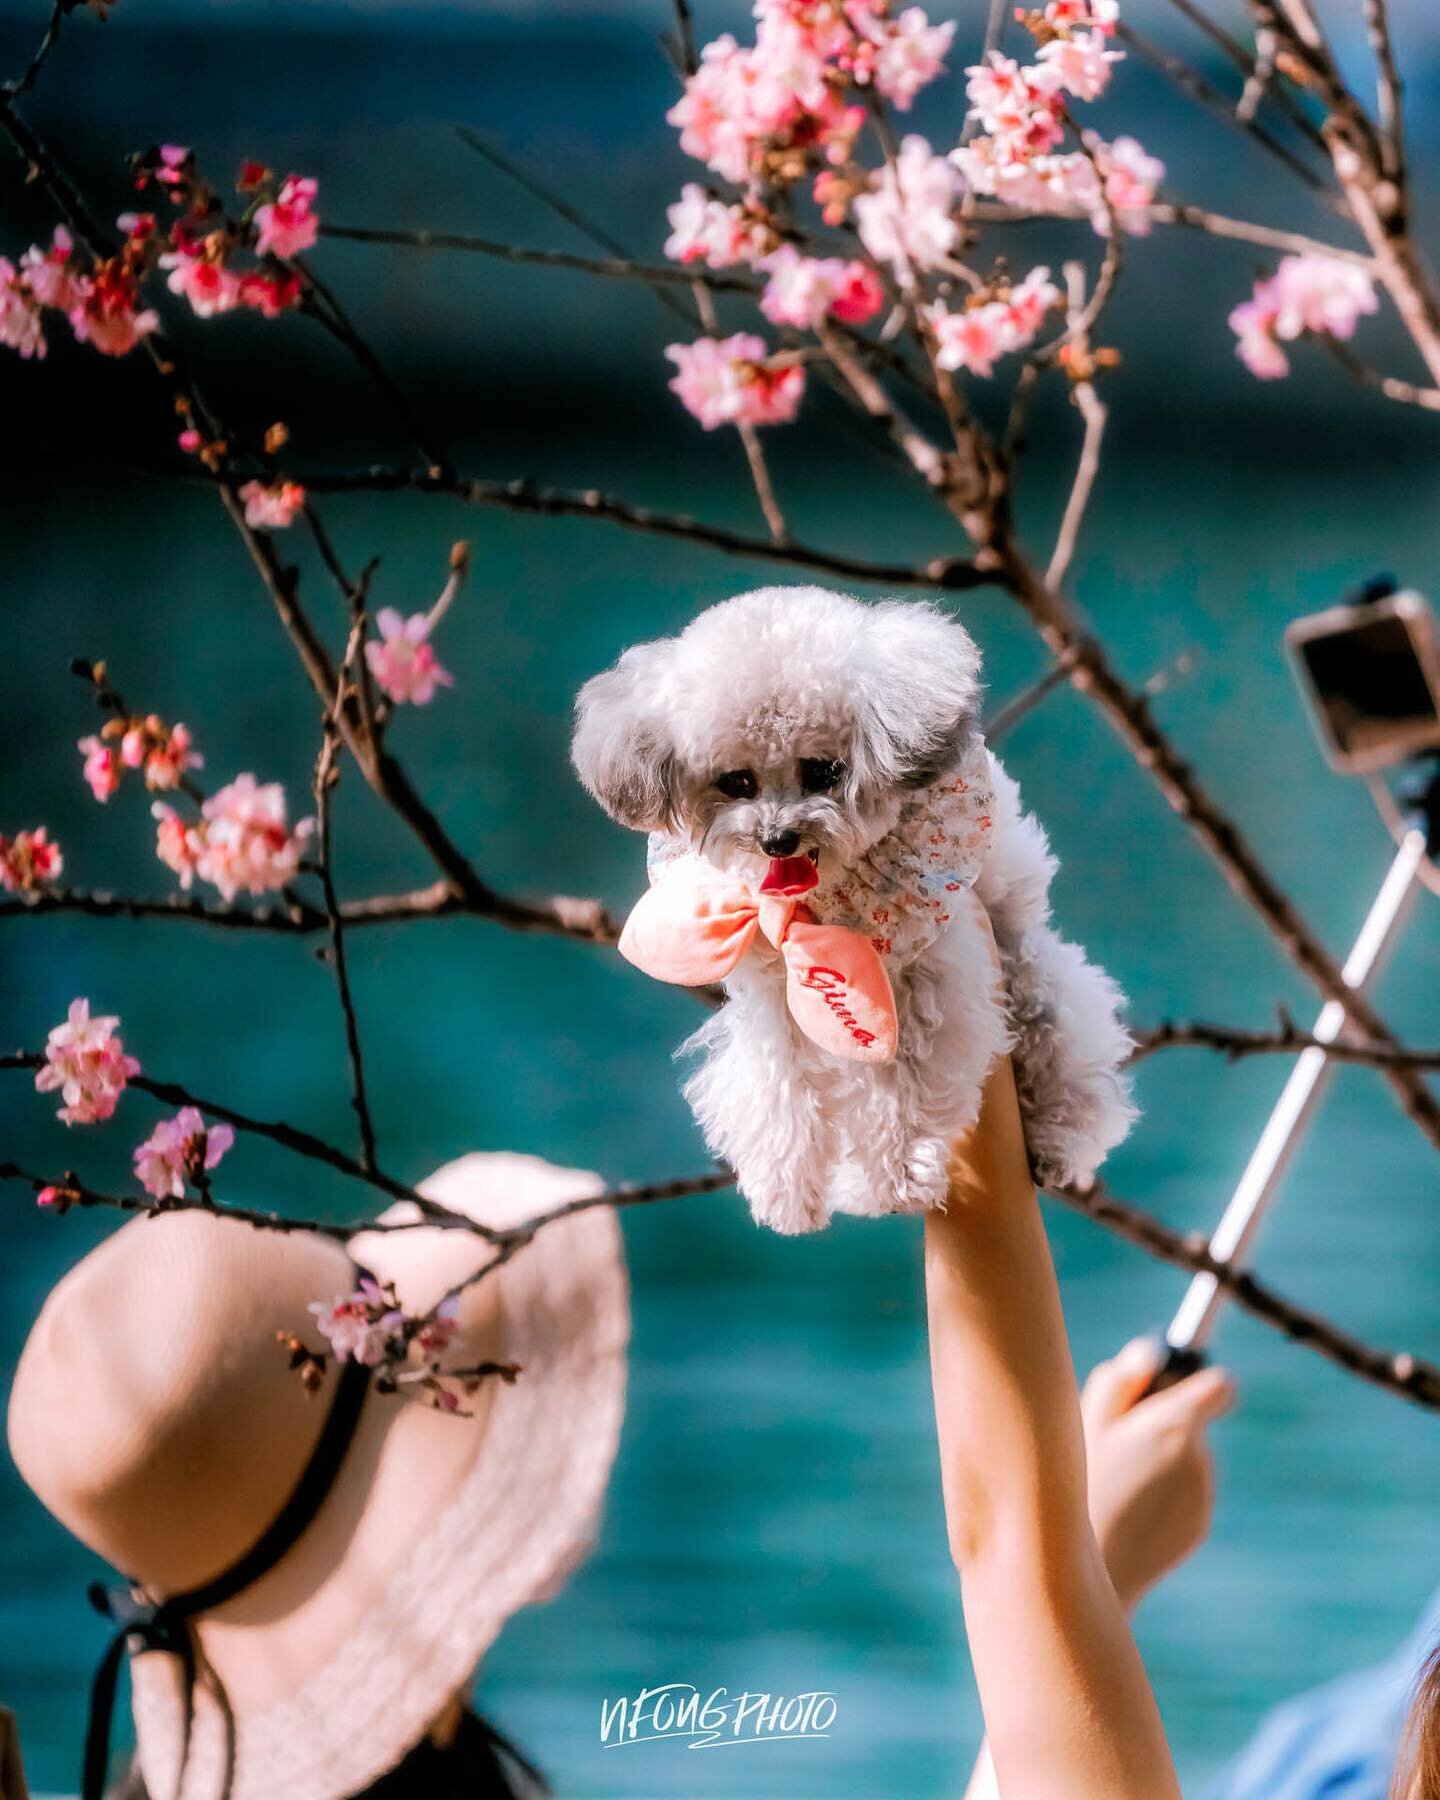 Spring&hellip;&hellip;

and dogs&hellip;

Please leave a like and a comment if you like it. Follow @nfongphoto for more!
.
.
.
.
.
#nfongphoto #hongkong #discoverhongkong #explorehongkong #insidehongkong #awesomehongkong #hongkonginsta #sony #100400g